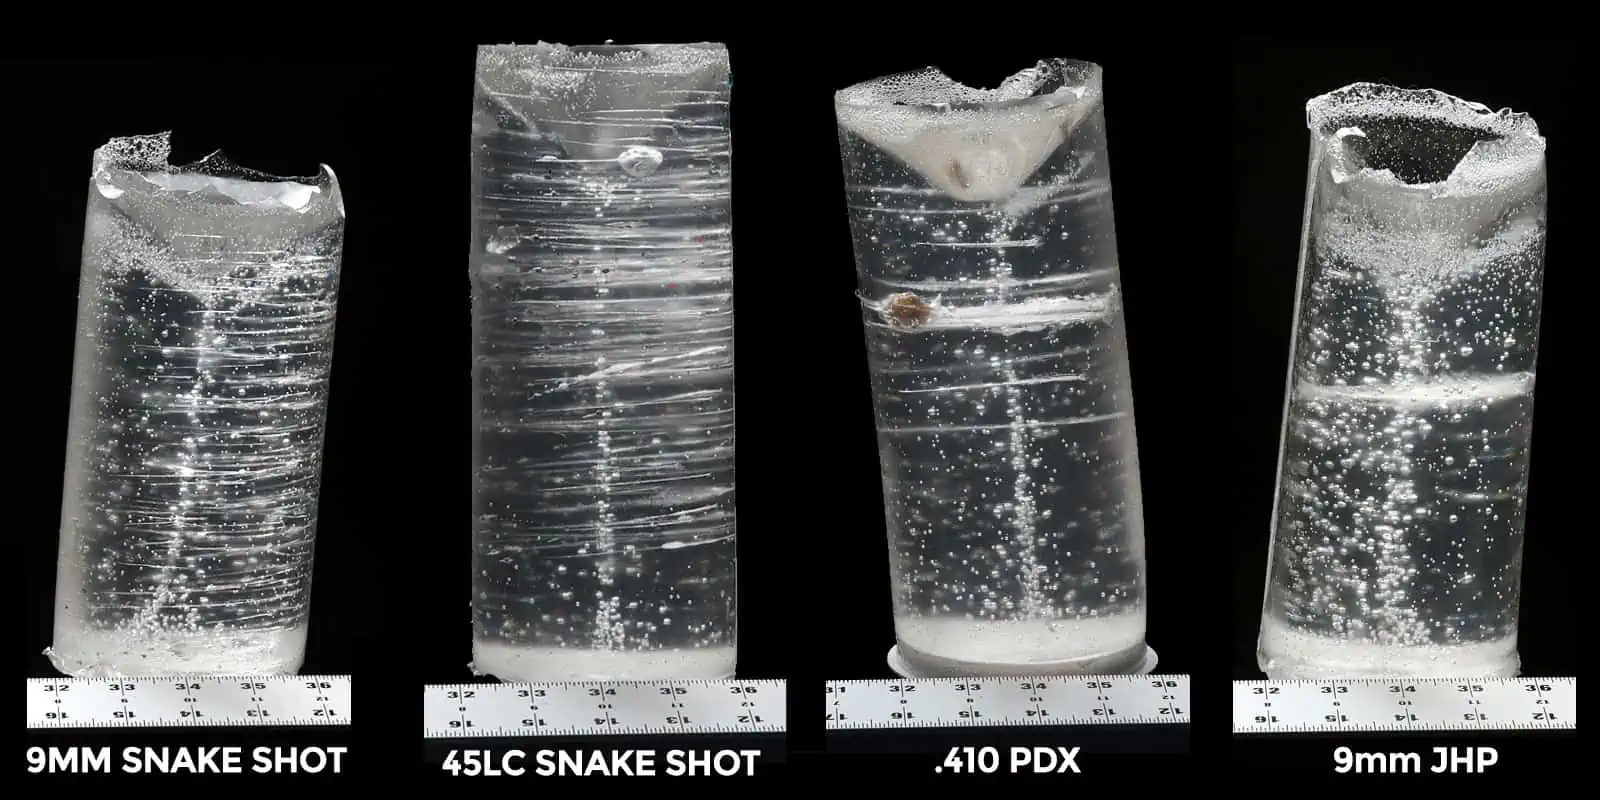 Snake shot fired into ballistic gelatin